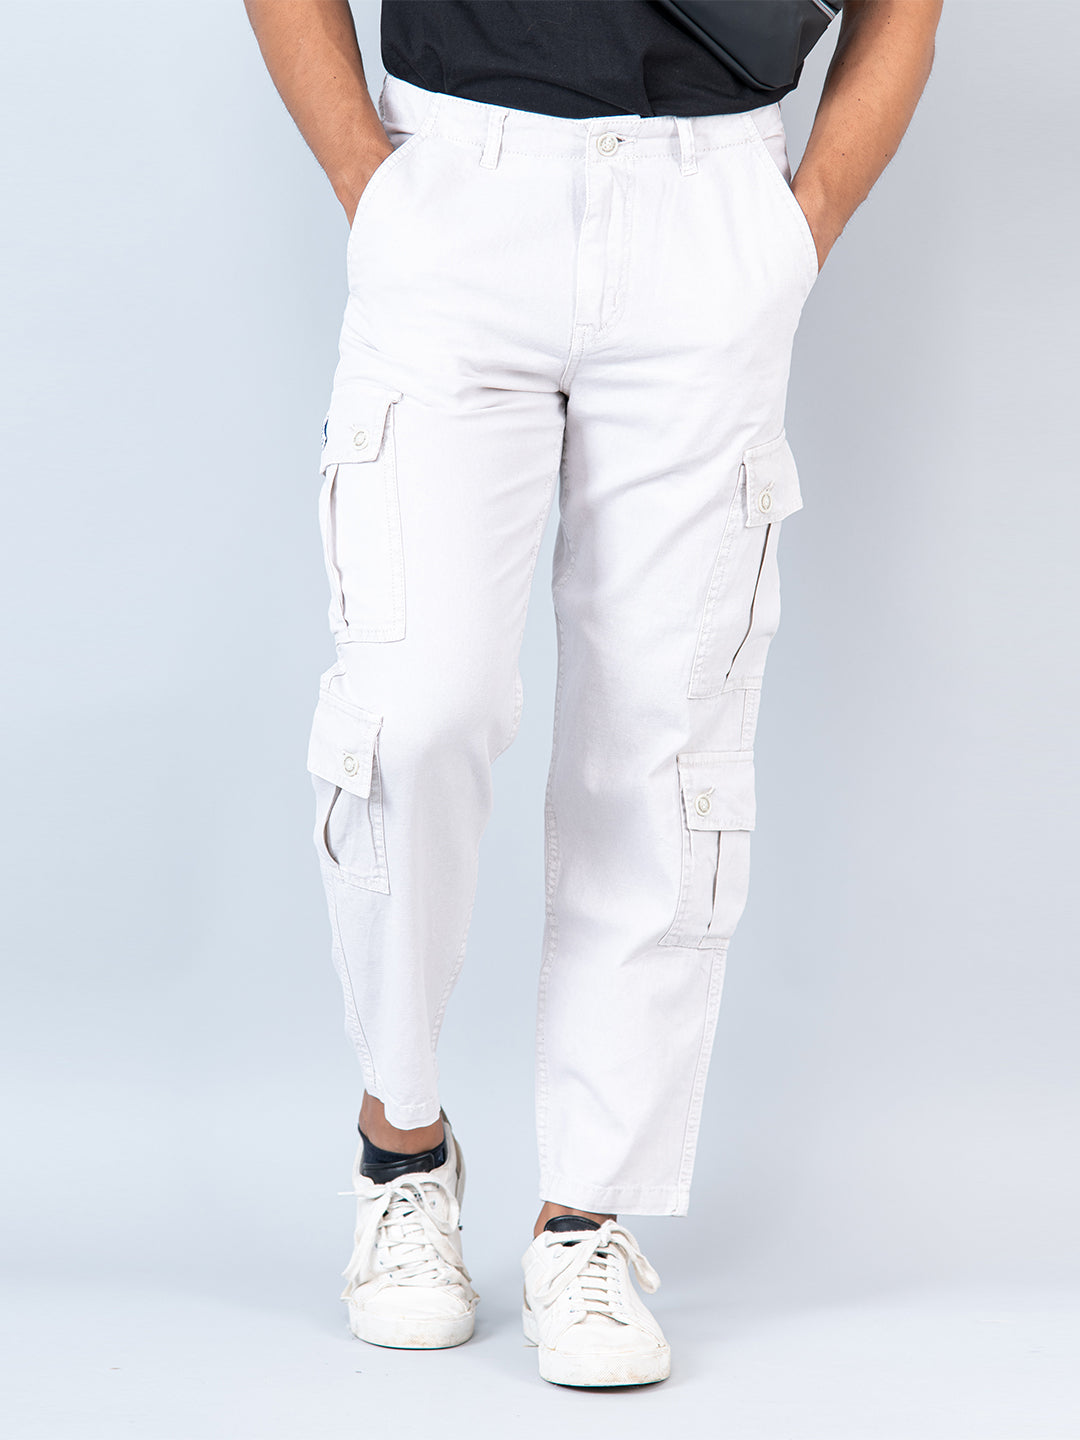 Buy Silver grey Trousers & Pants for Men by PAUL STREET Online | Ajio.com